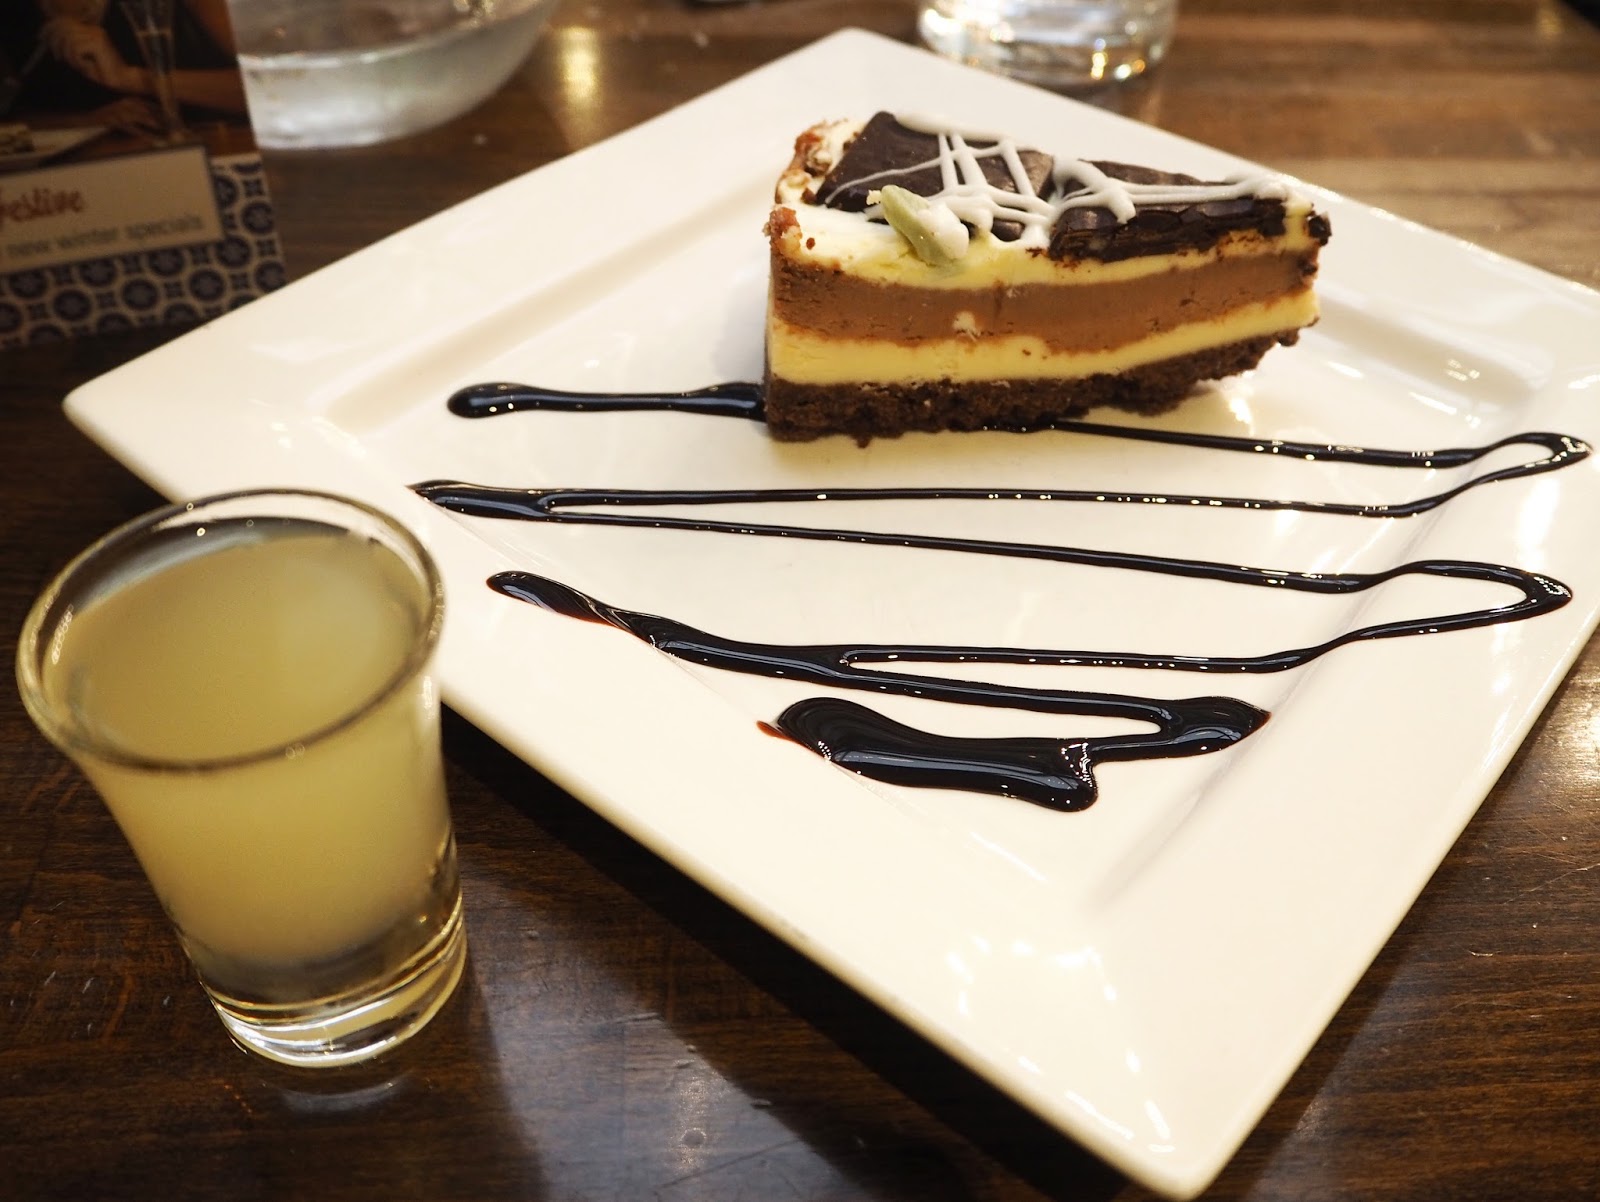 Prezzo Italian: Mint Chocolate Cheesecake with a shot of Limoncello